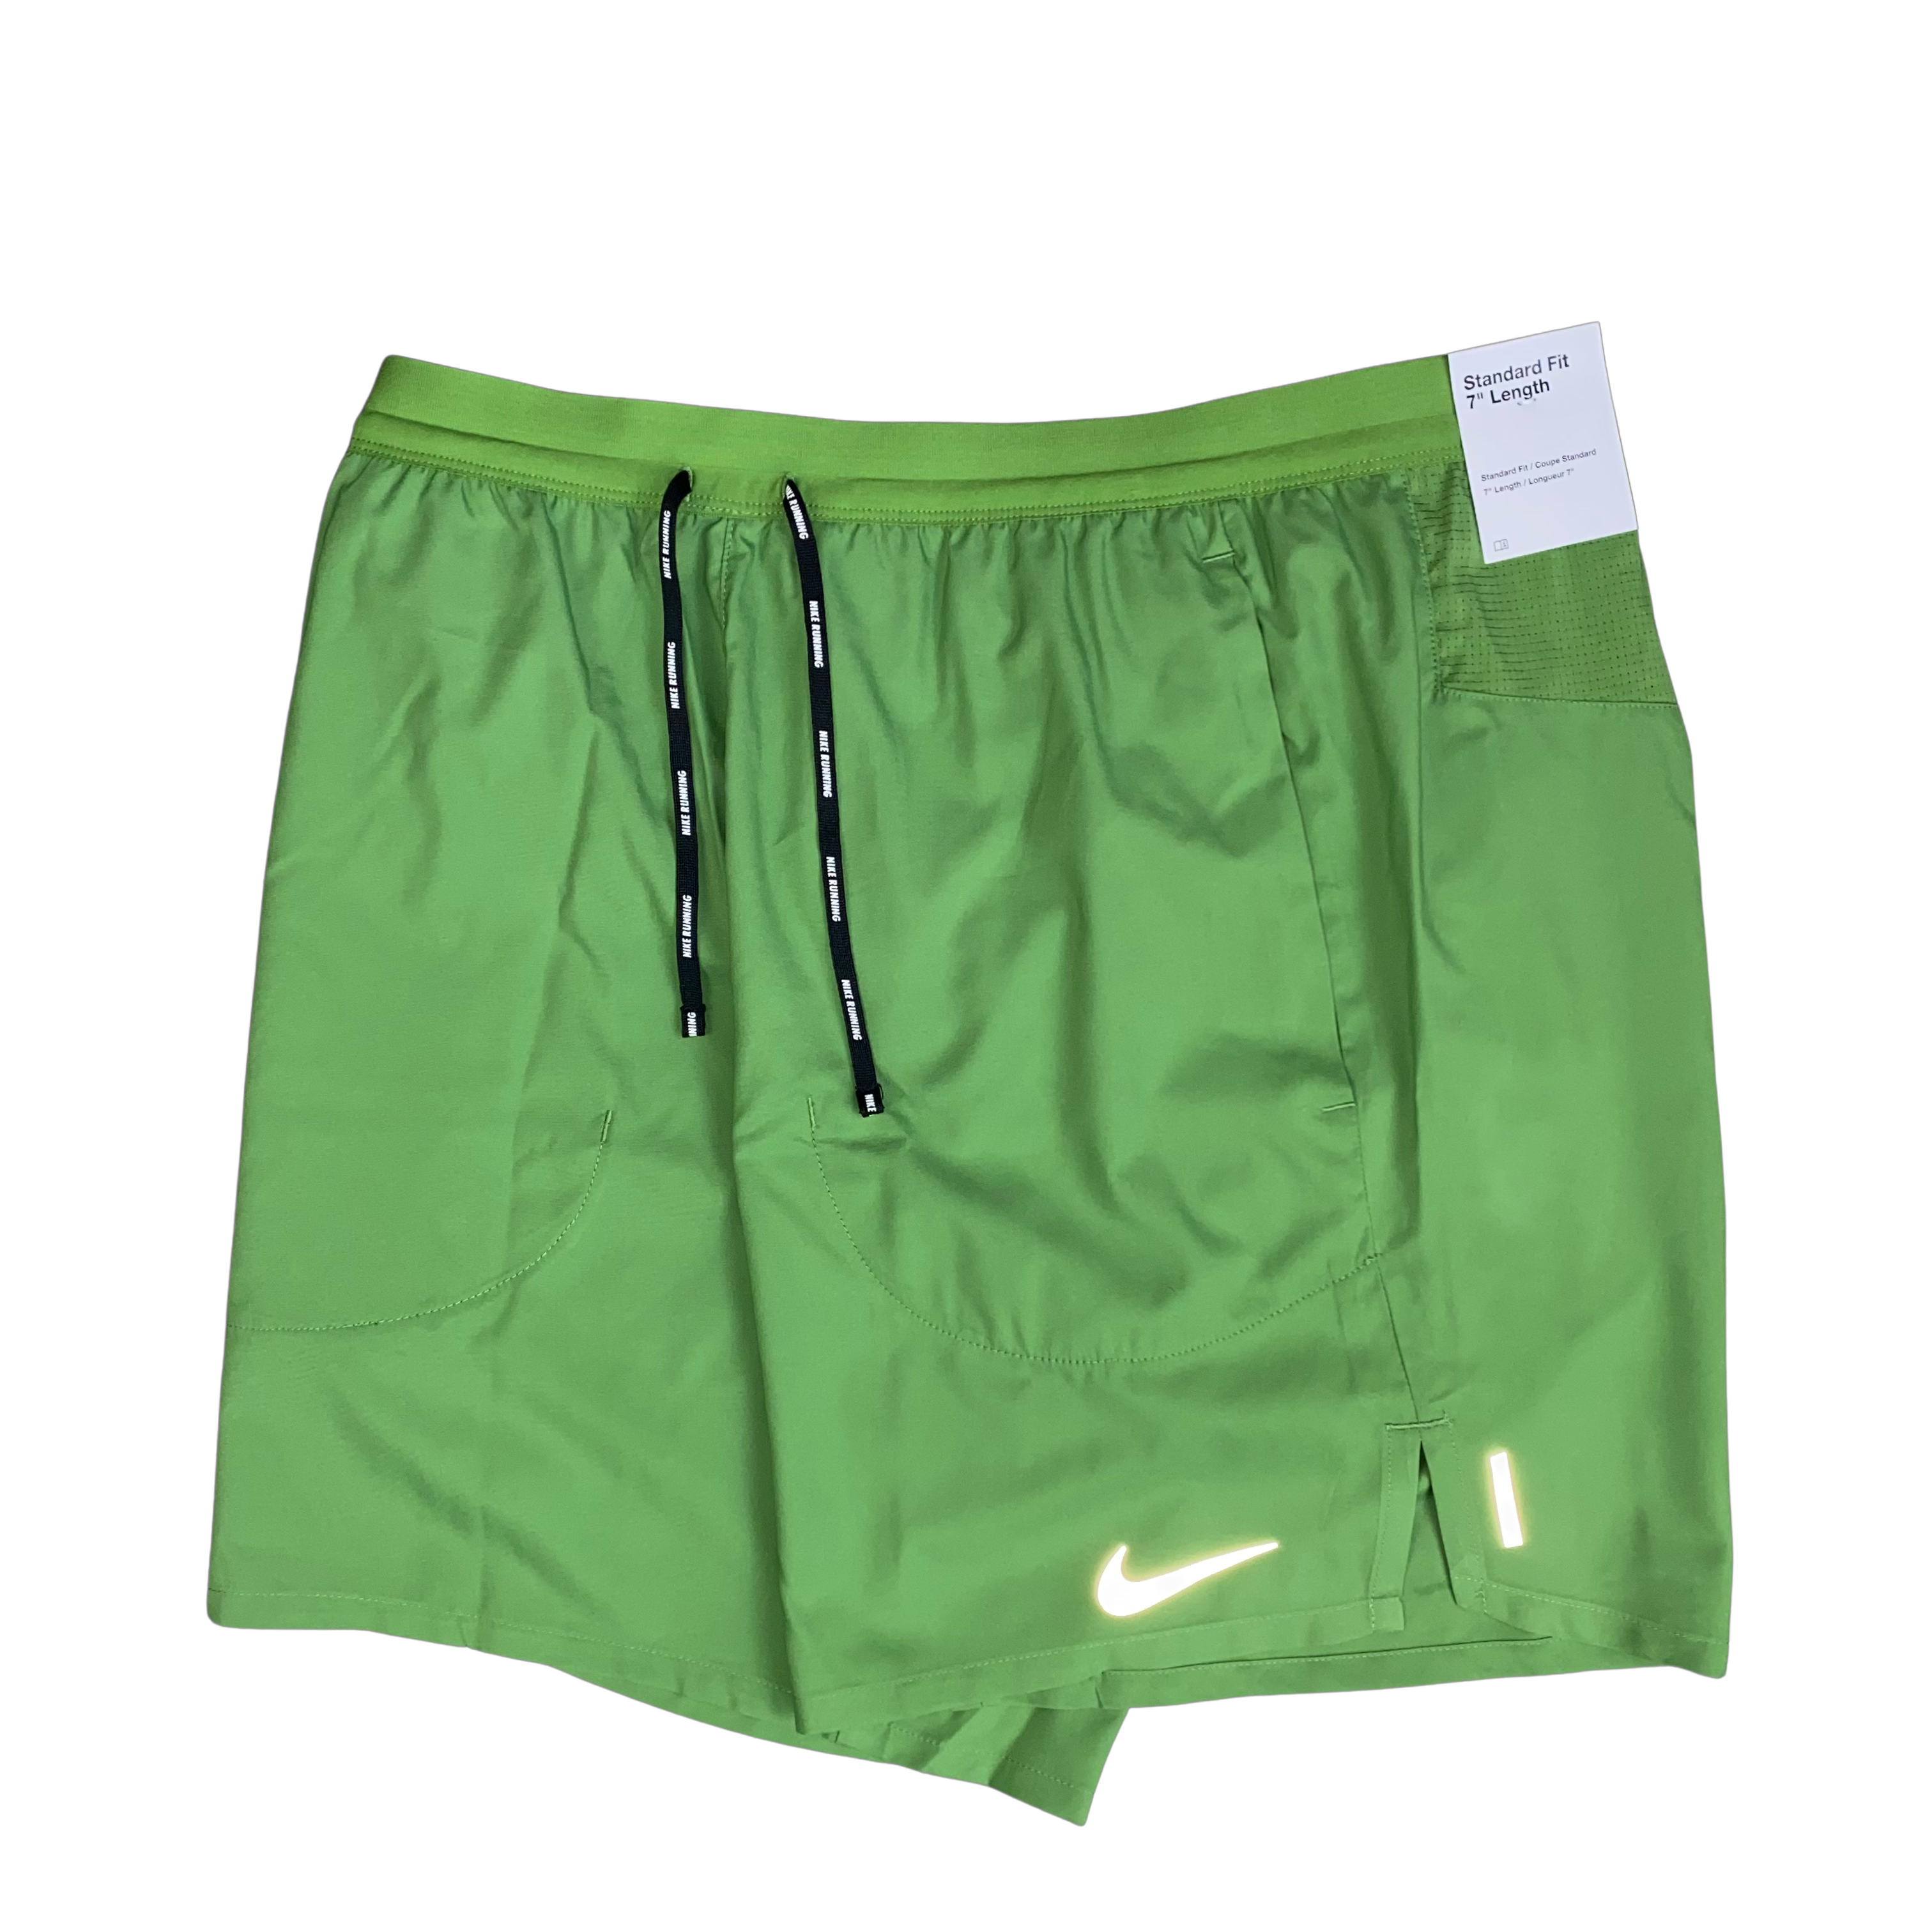 Nike Training Pro Dri-FIT 365 3-Inch legging shorts in lime